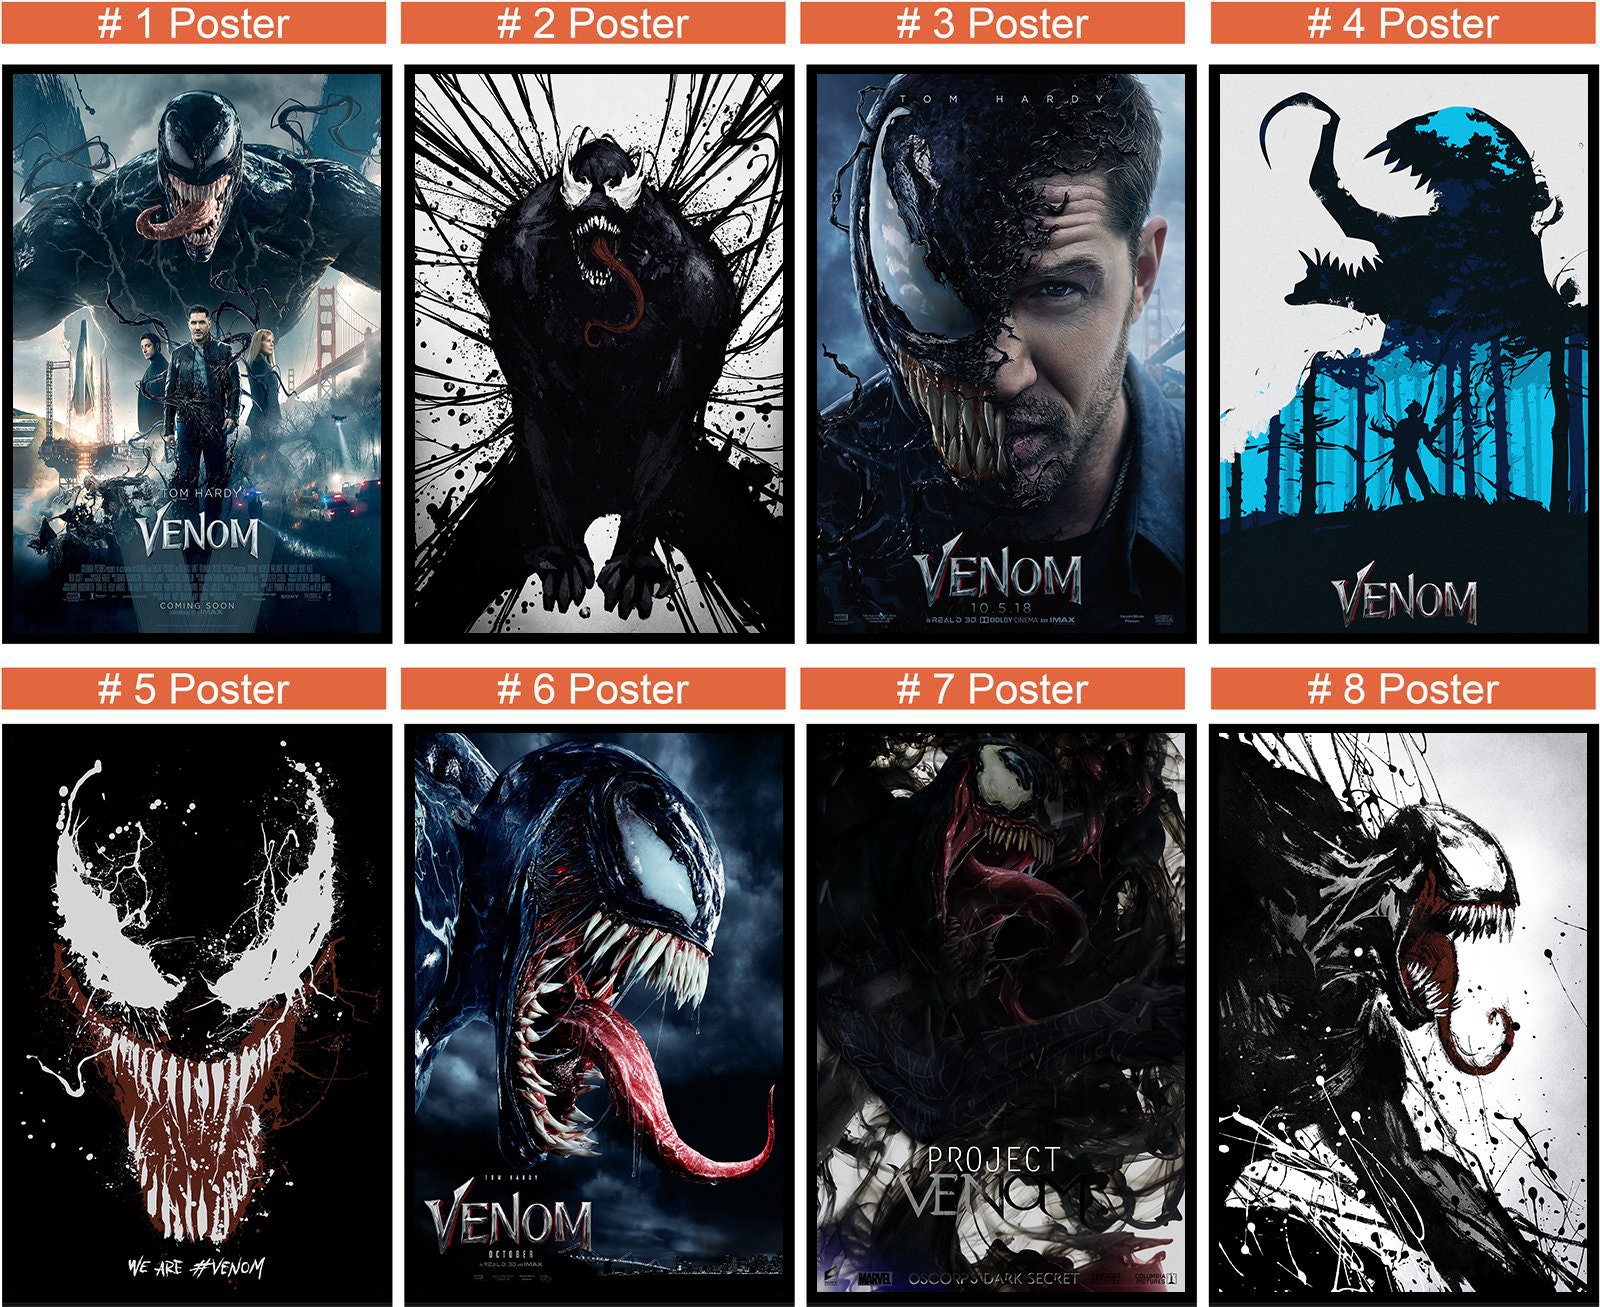 Venom b 11x17 Inch Movie POSTER 